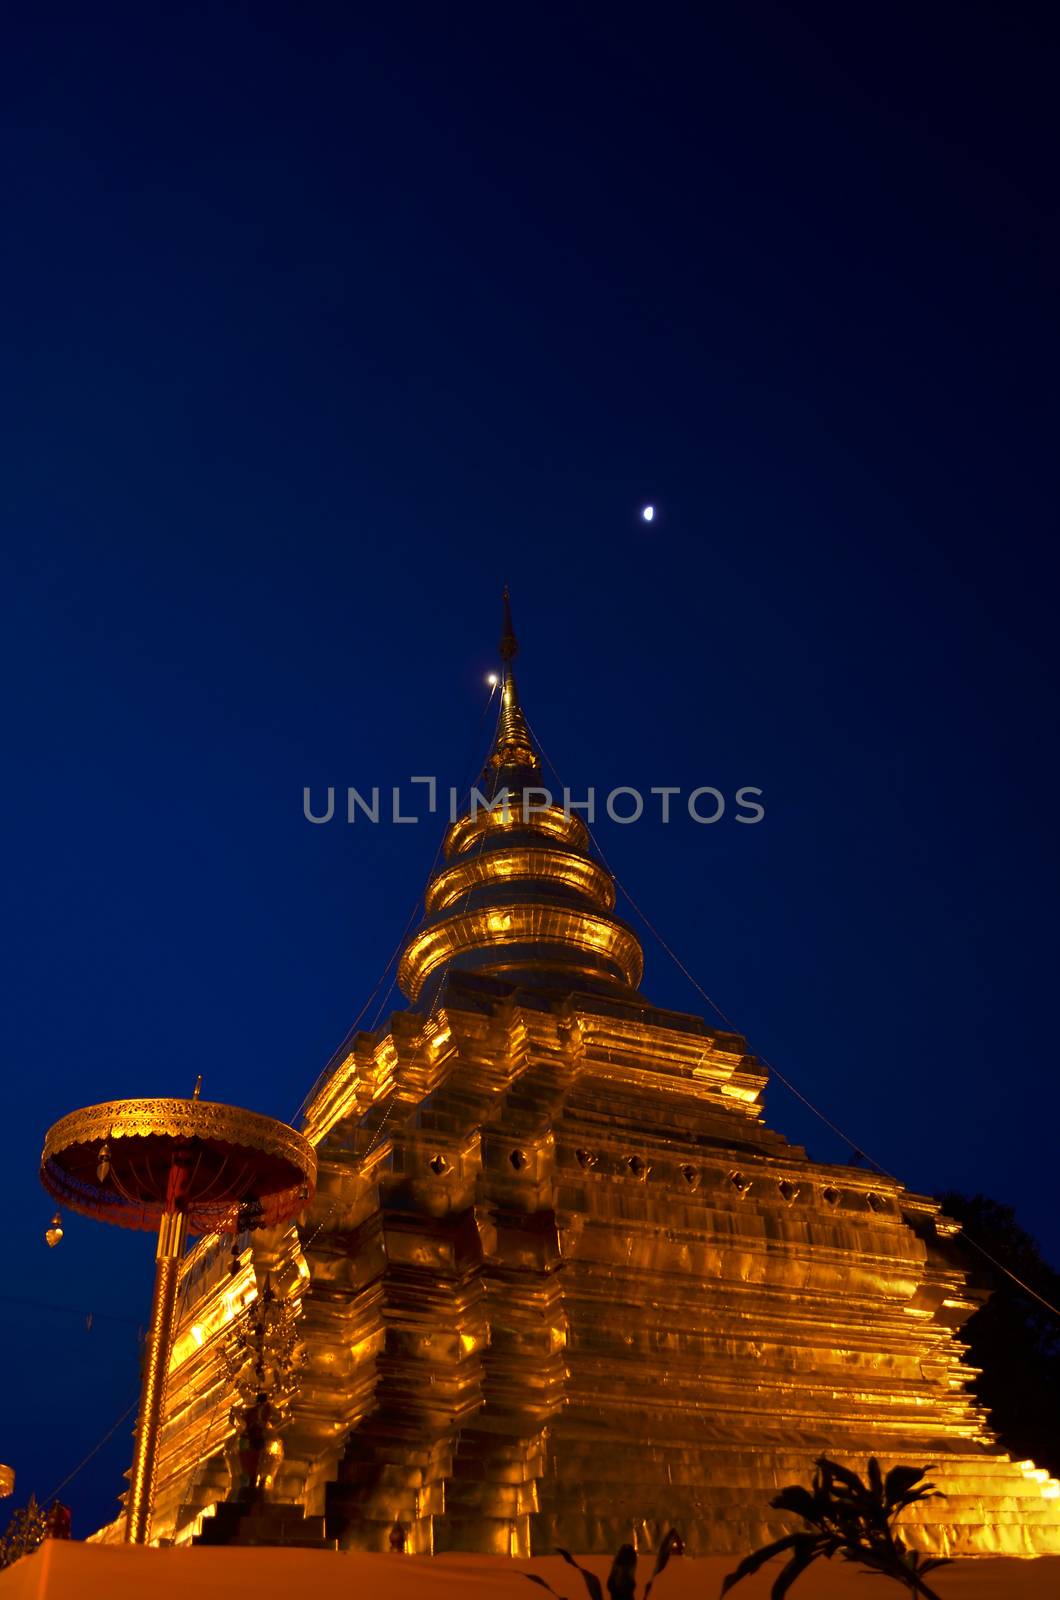 Phra That Sri Jom Thong  Before Sunrise, Series 1_11, Golden Pagoda on Spot Light under Moon, Chiang Mai province, Thailand